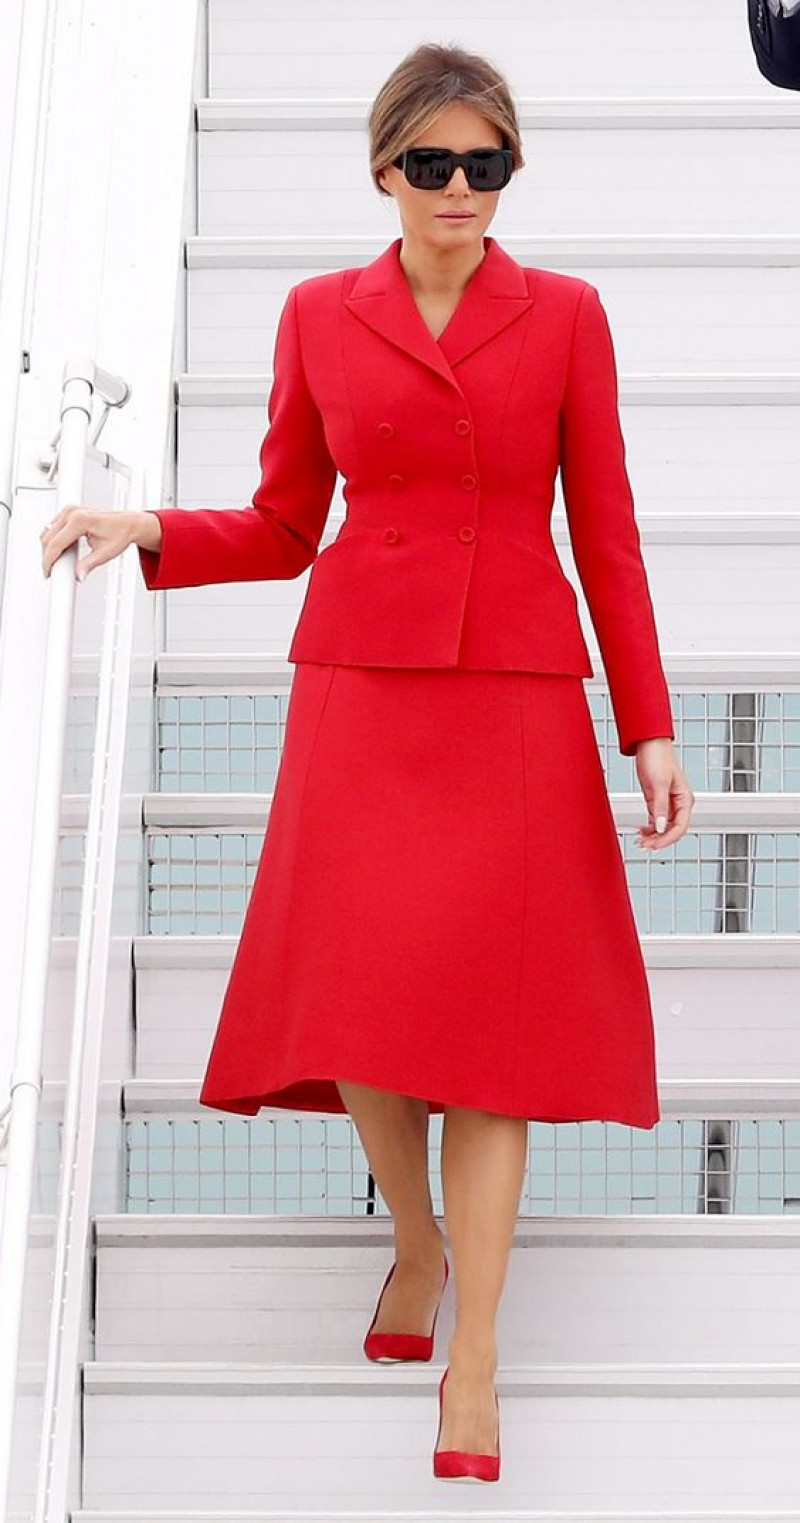 red wool coat, red formal skirt skirt, red pump